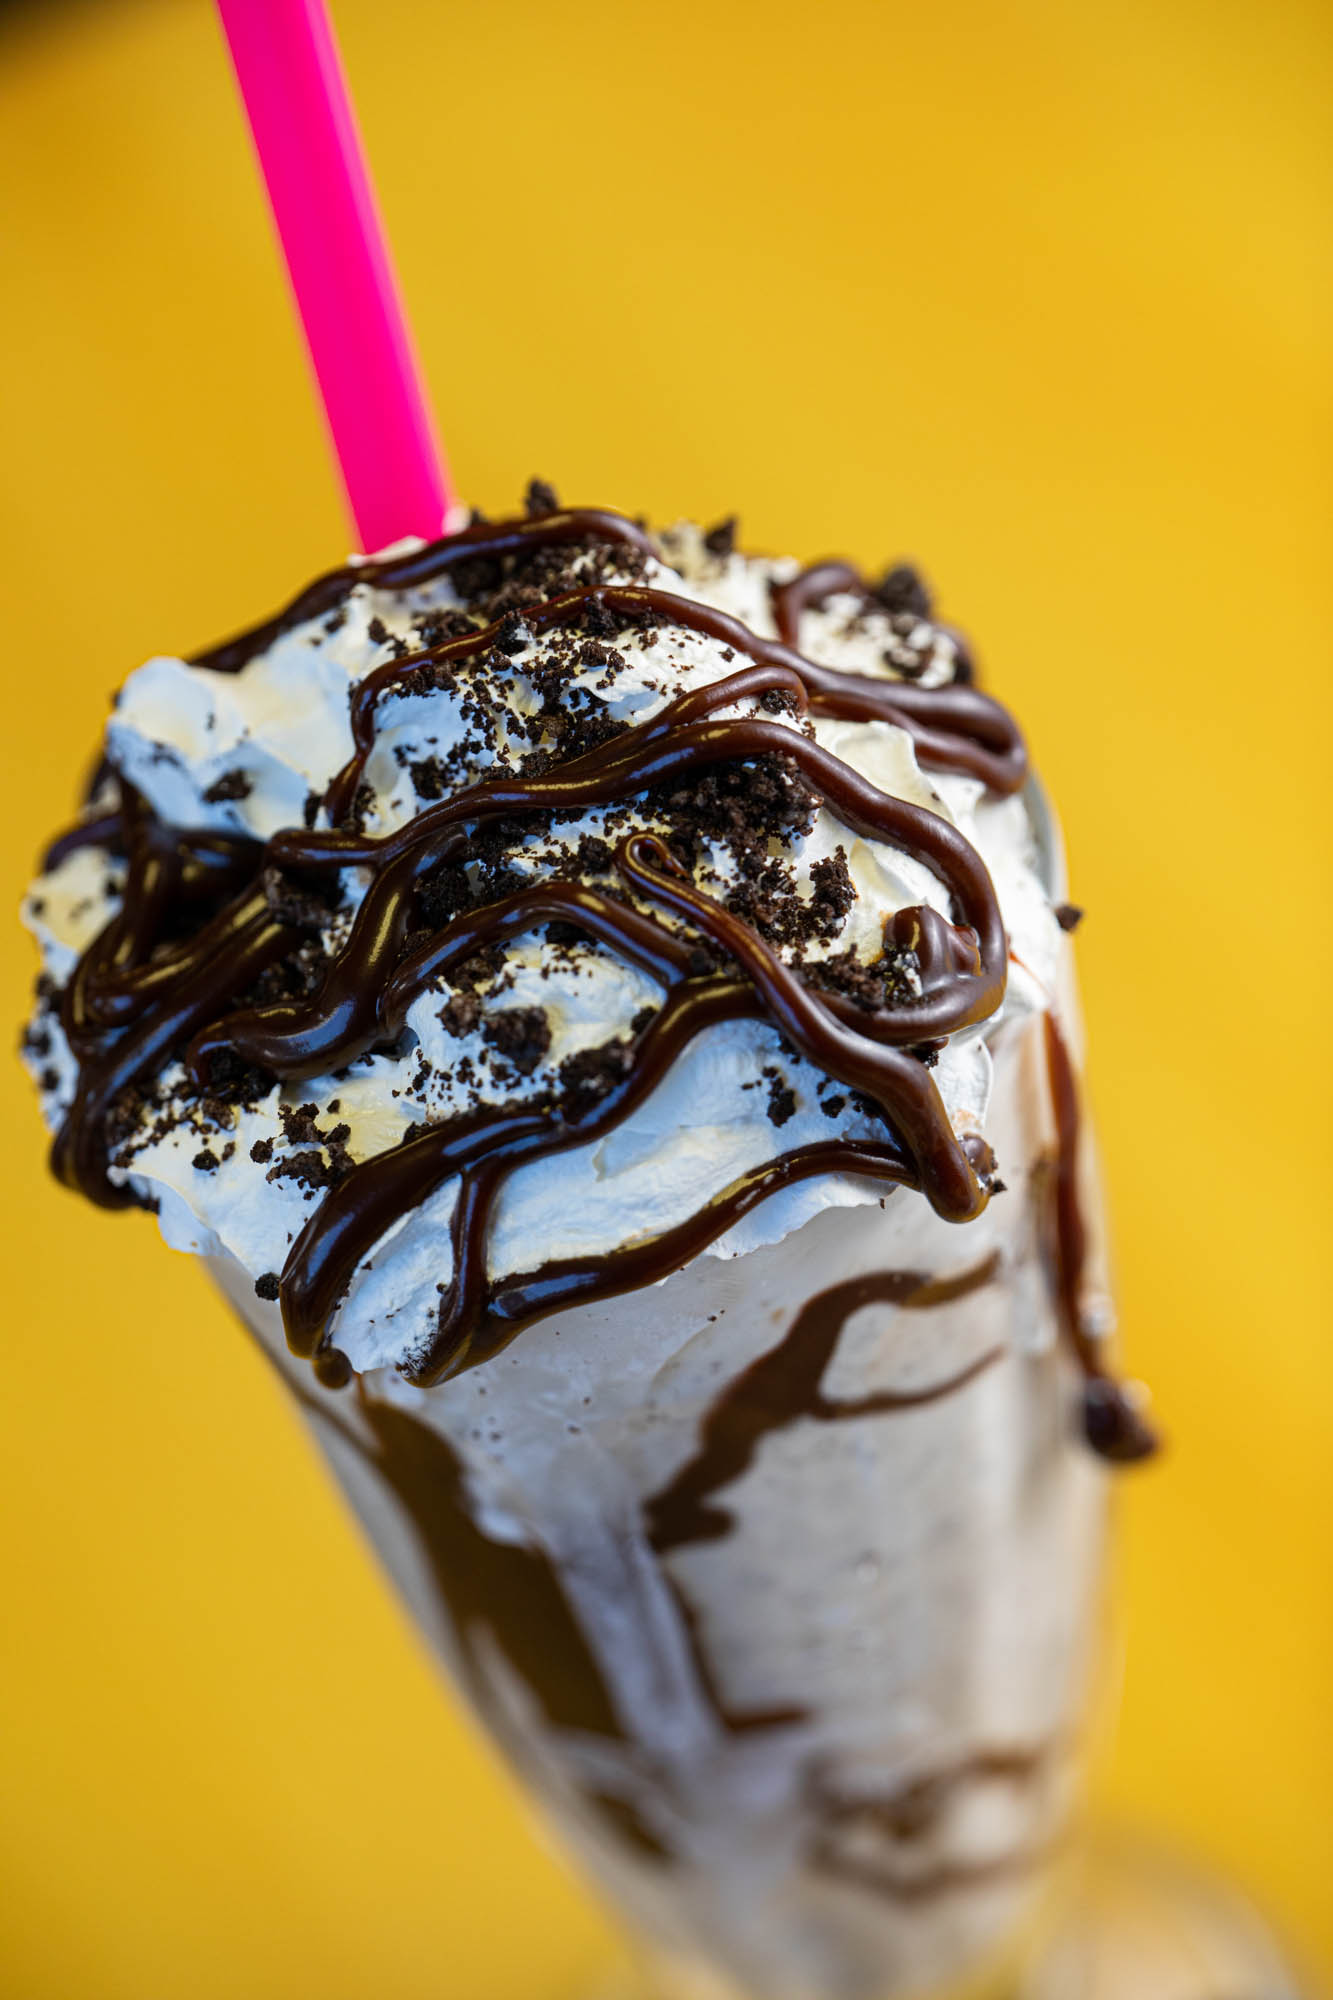 Milkshake, with chocolate syrup and sprinkles, closeup